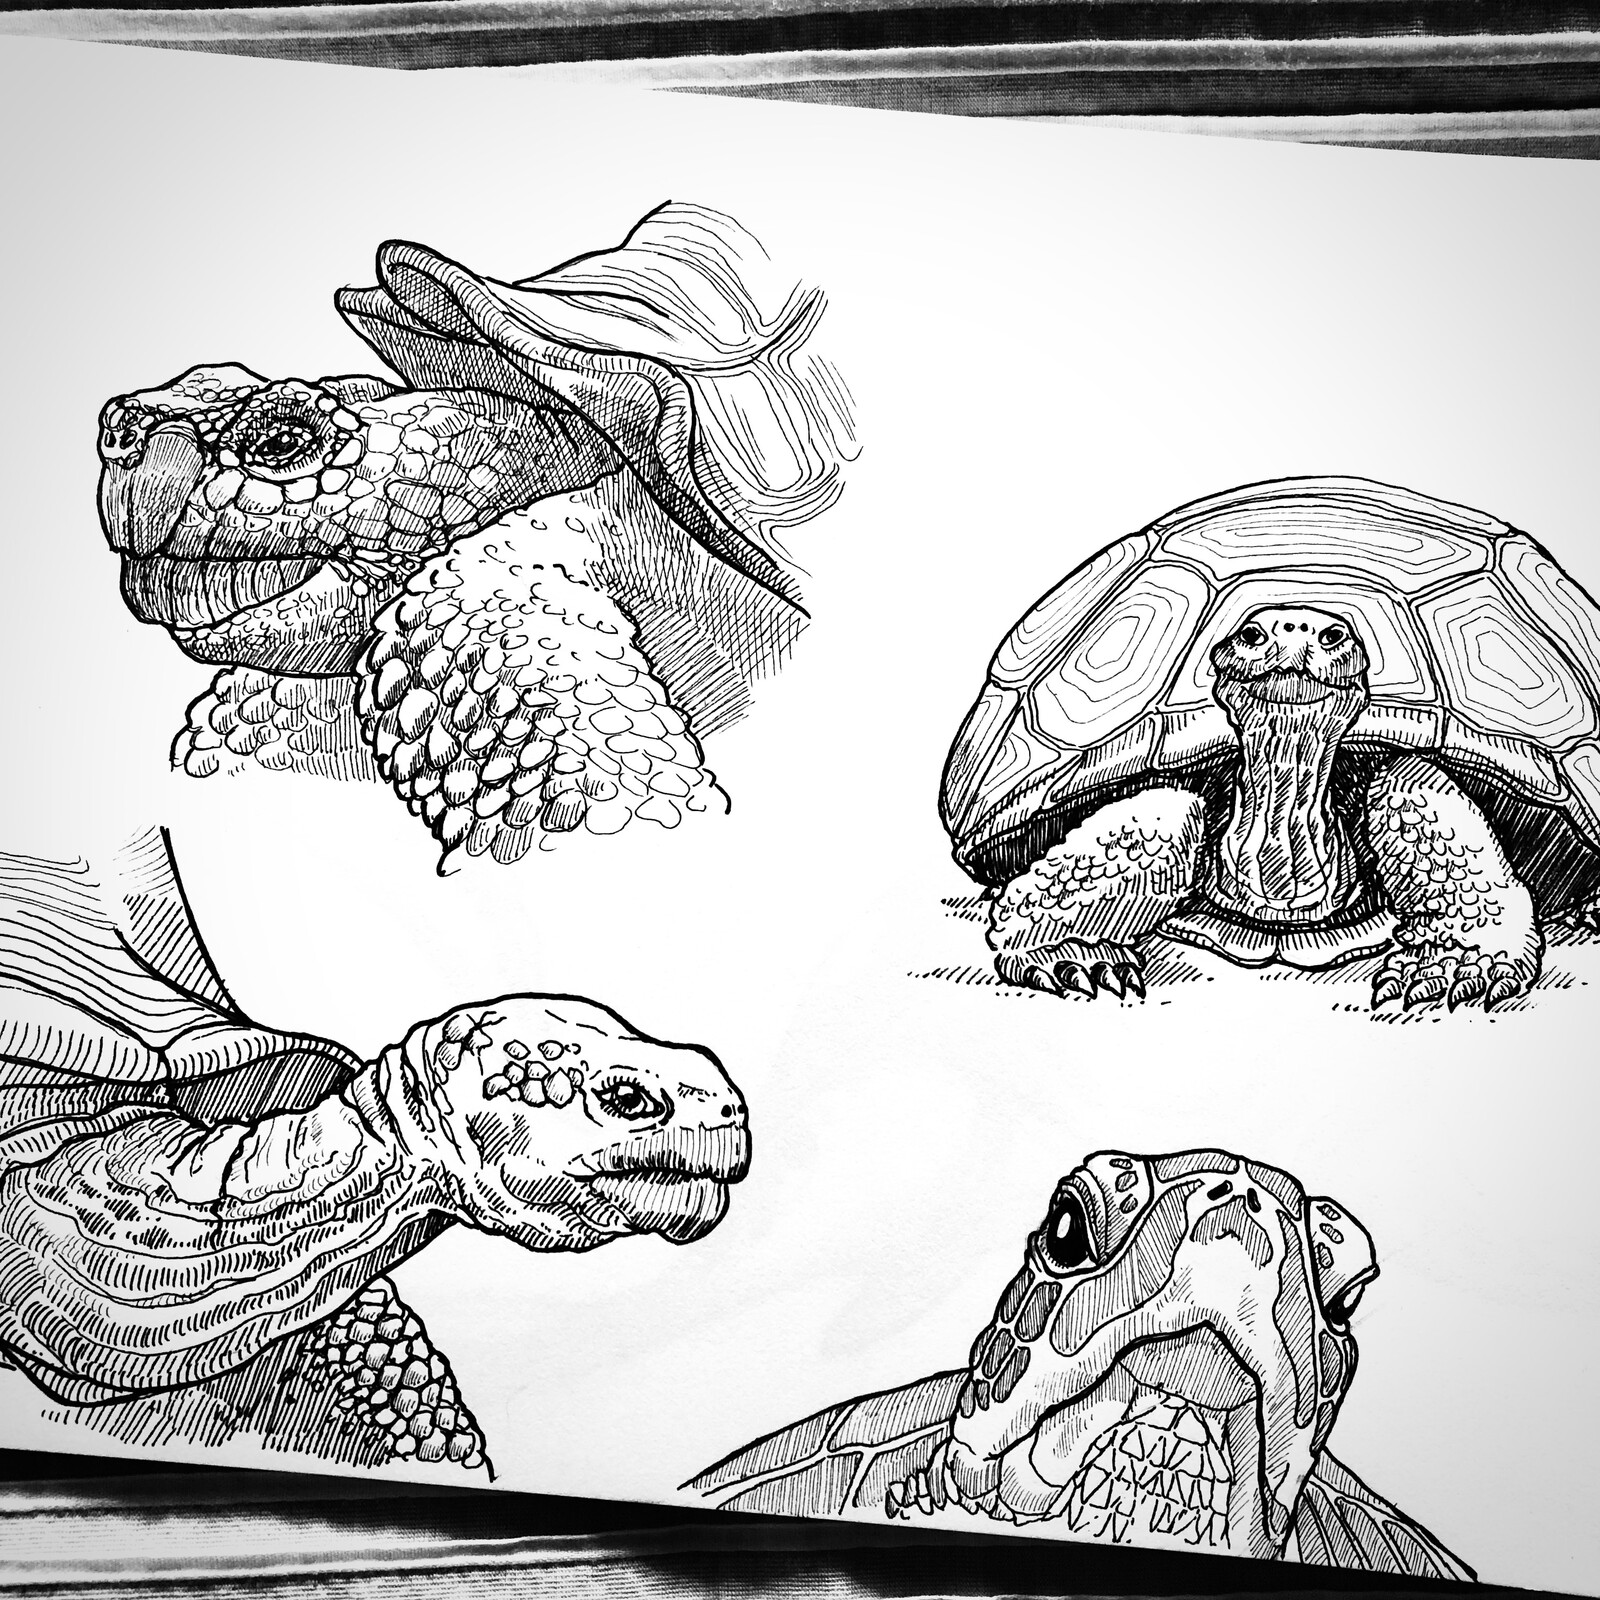 Soft animal - Turtles